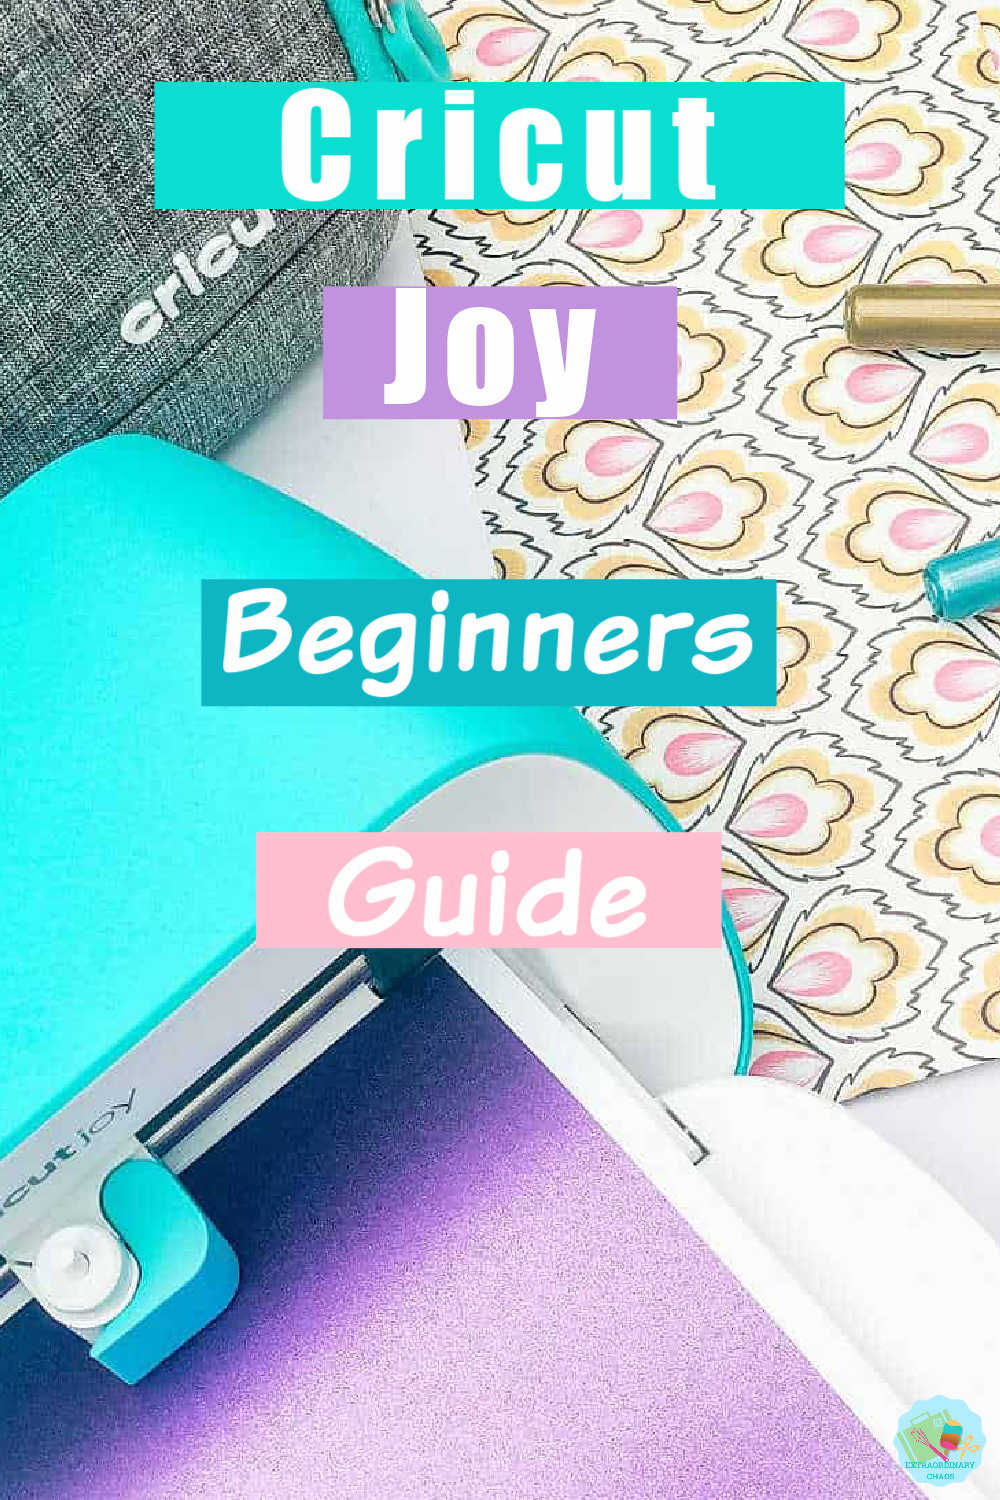 Cricut Joy Beginners Guide How To Master The Cricut Joy